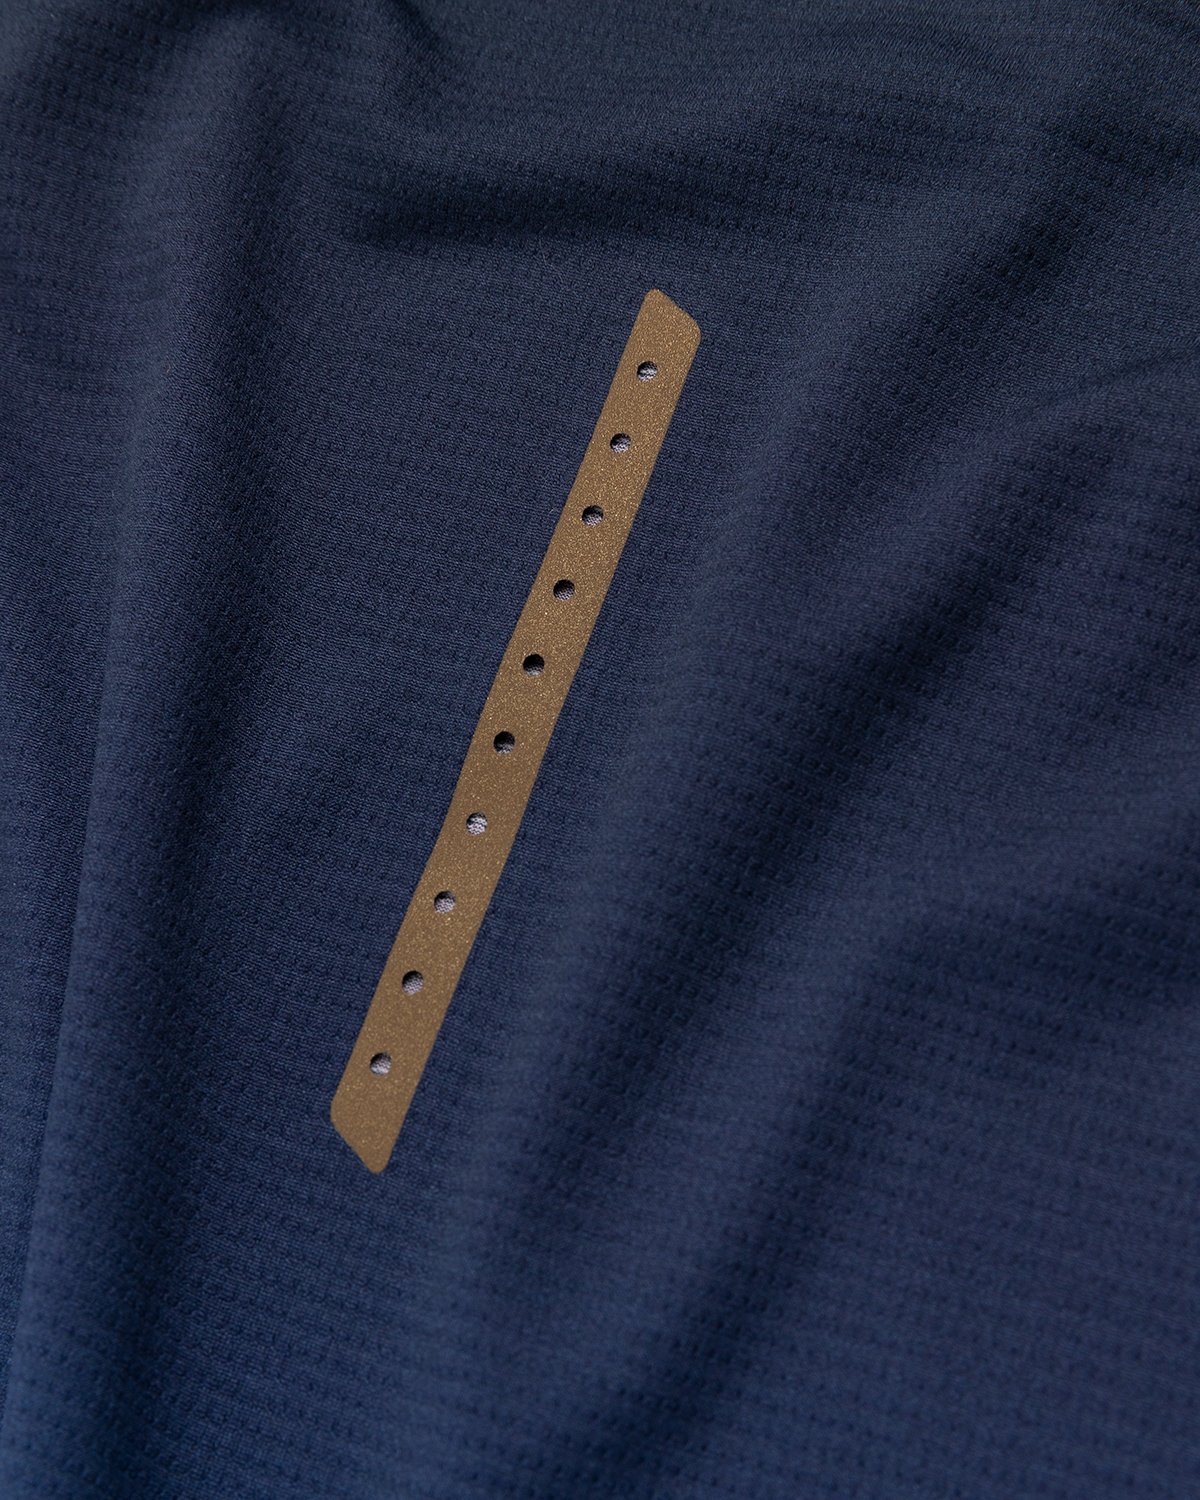 Loewe x On - Men's Performance T-Shirt Gradient Blue - Clothing - Blue - Image 5